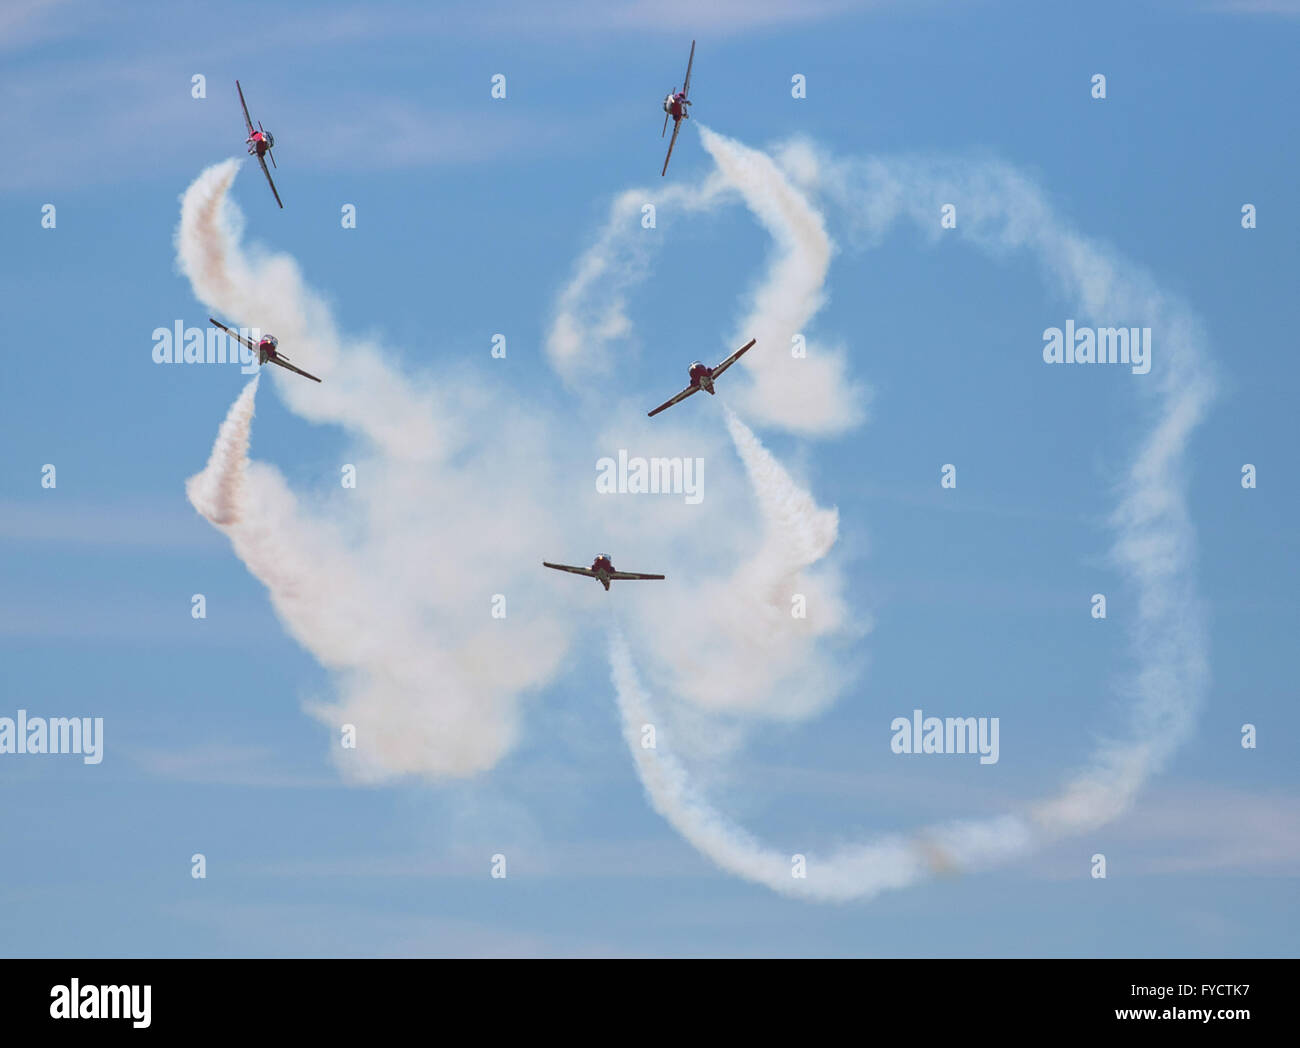 The Canadian Snowbirds aerobatic team perform complicated maneuvers in the sky over Springbank Airport near Calgary, Alberta. Stock Photo